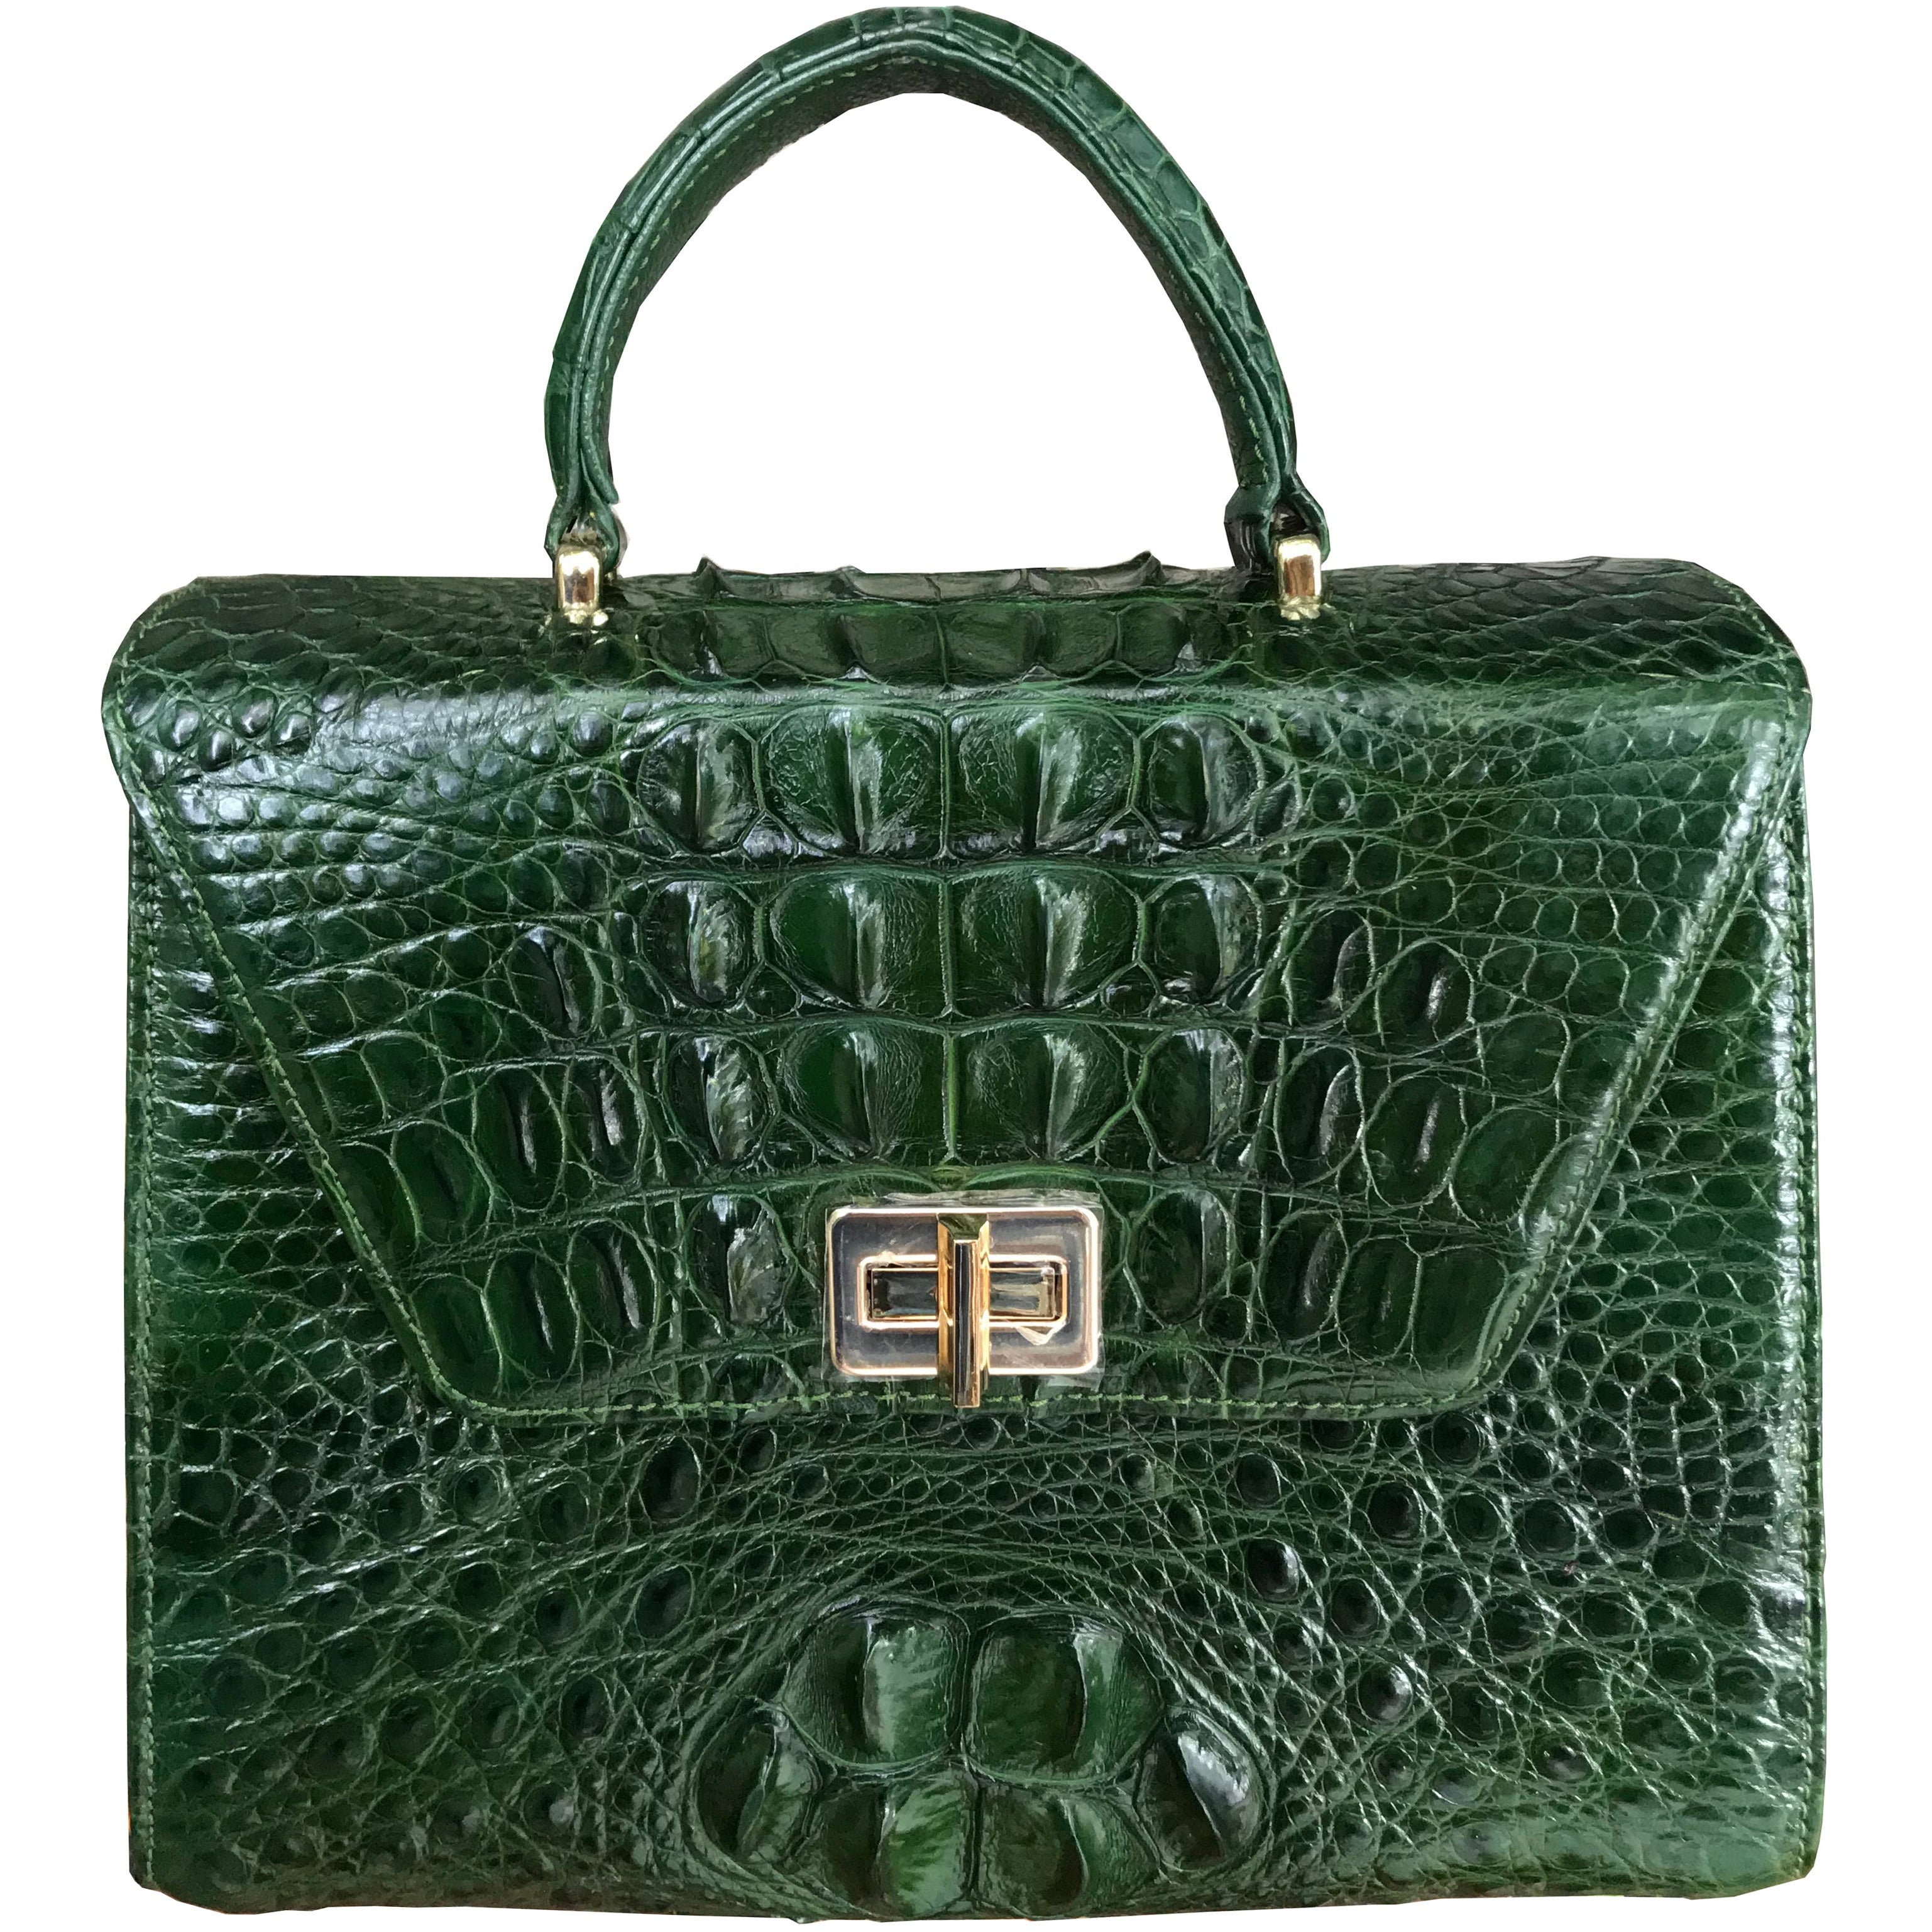 Green Leather Alligator Handbag Women Handmade Luxury Leather Bag - Work Bag Women - Leather Satchel Purse BAG-GRE-06 - Vinacreations